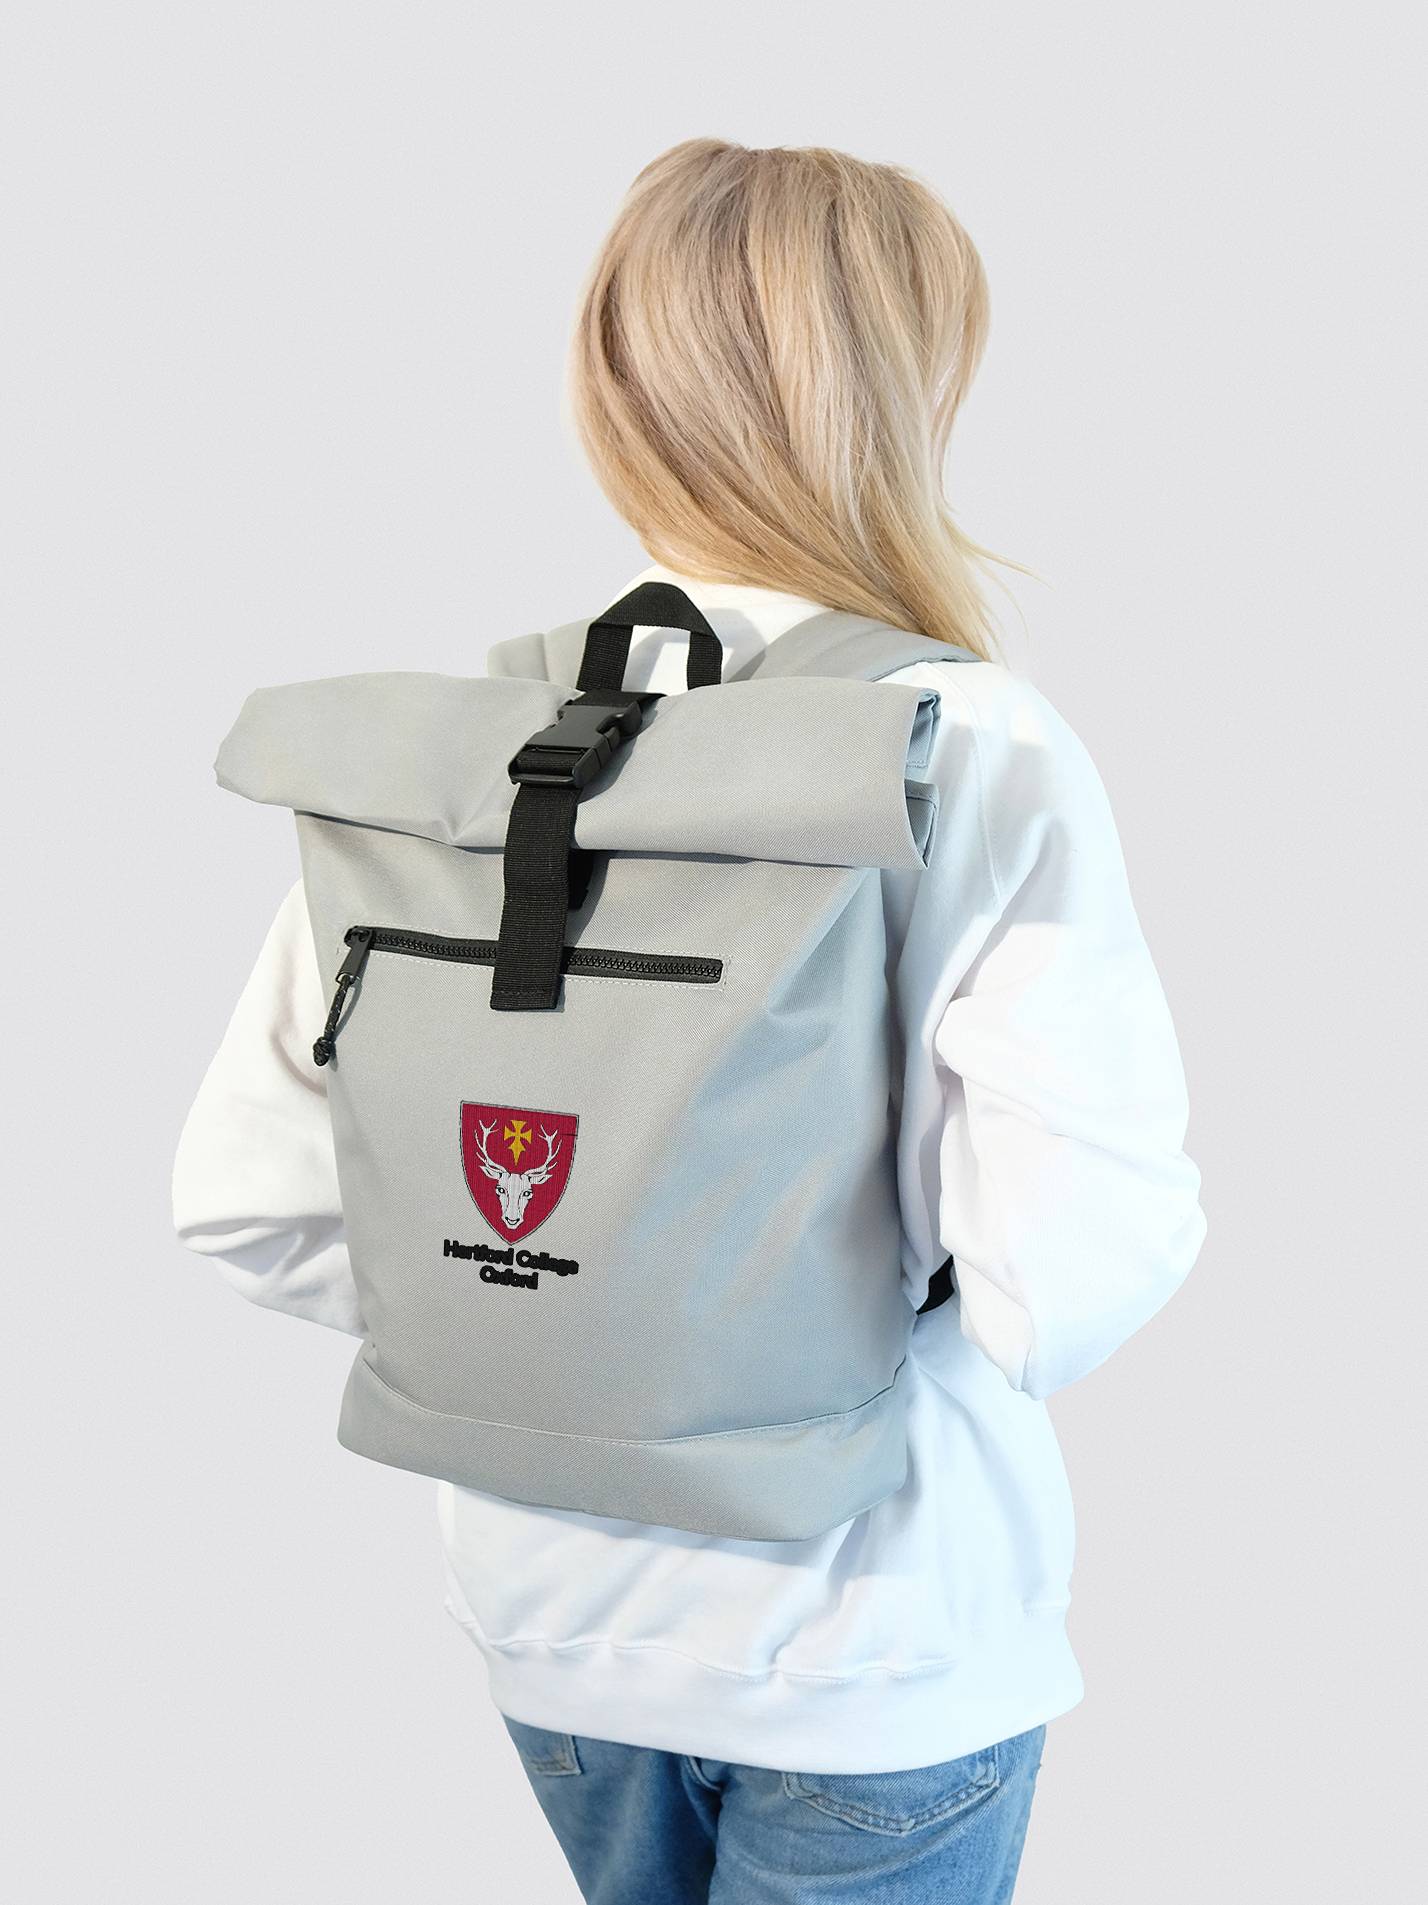 Hertford College Oxford JCR Roll Top Backpack